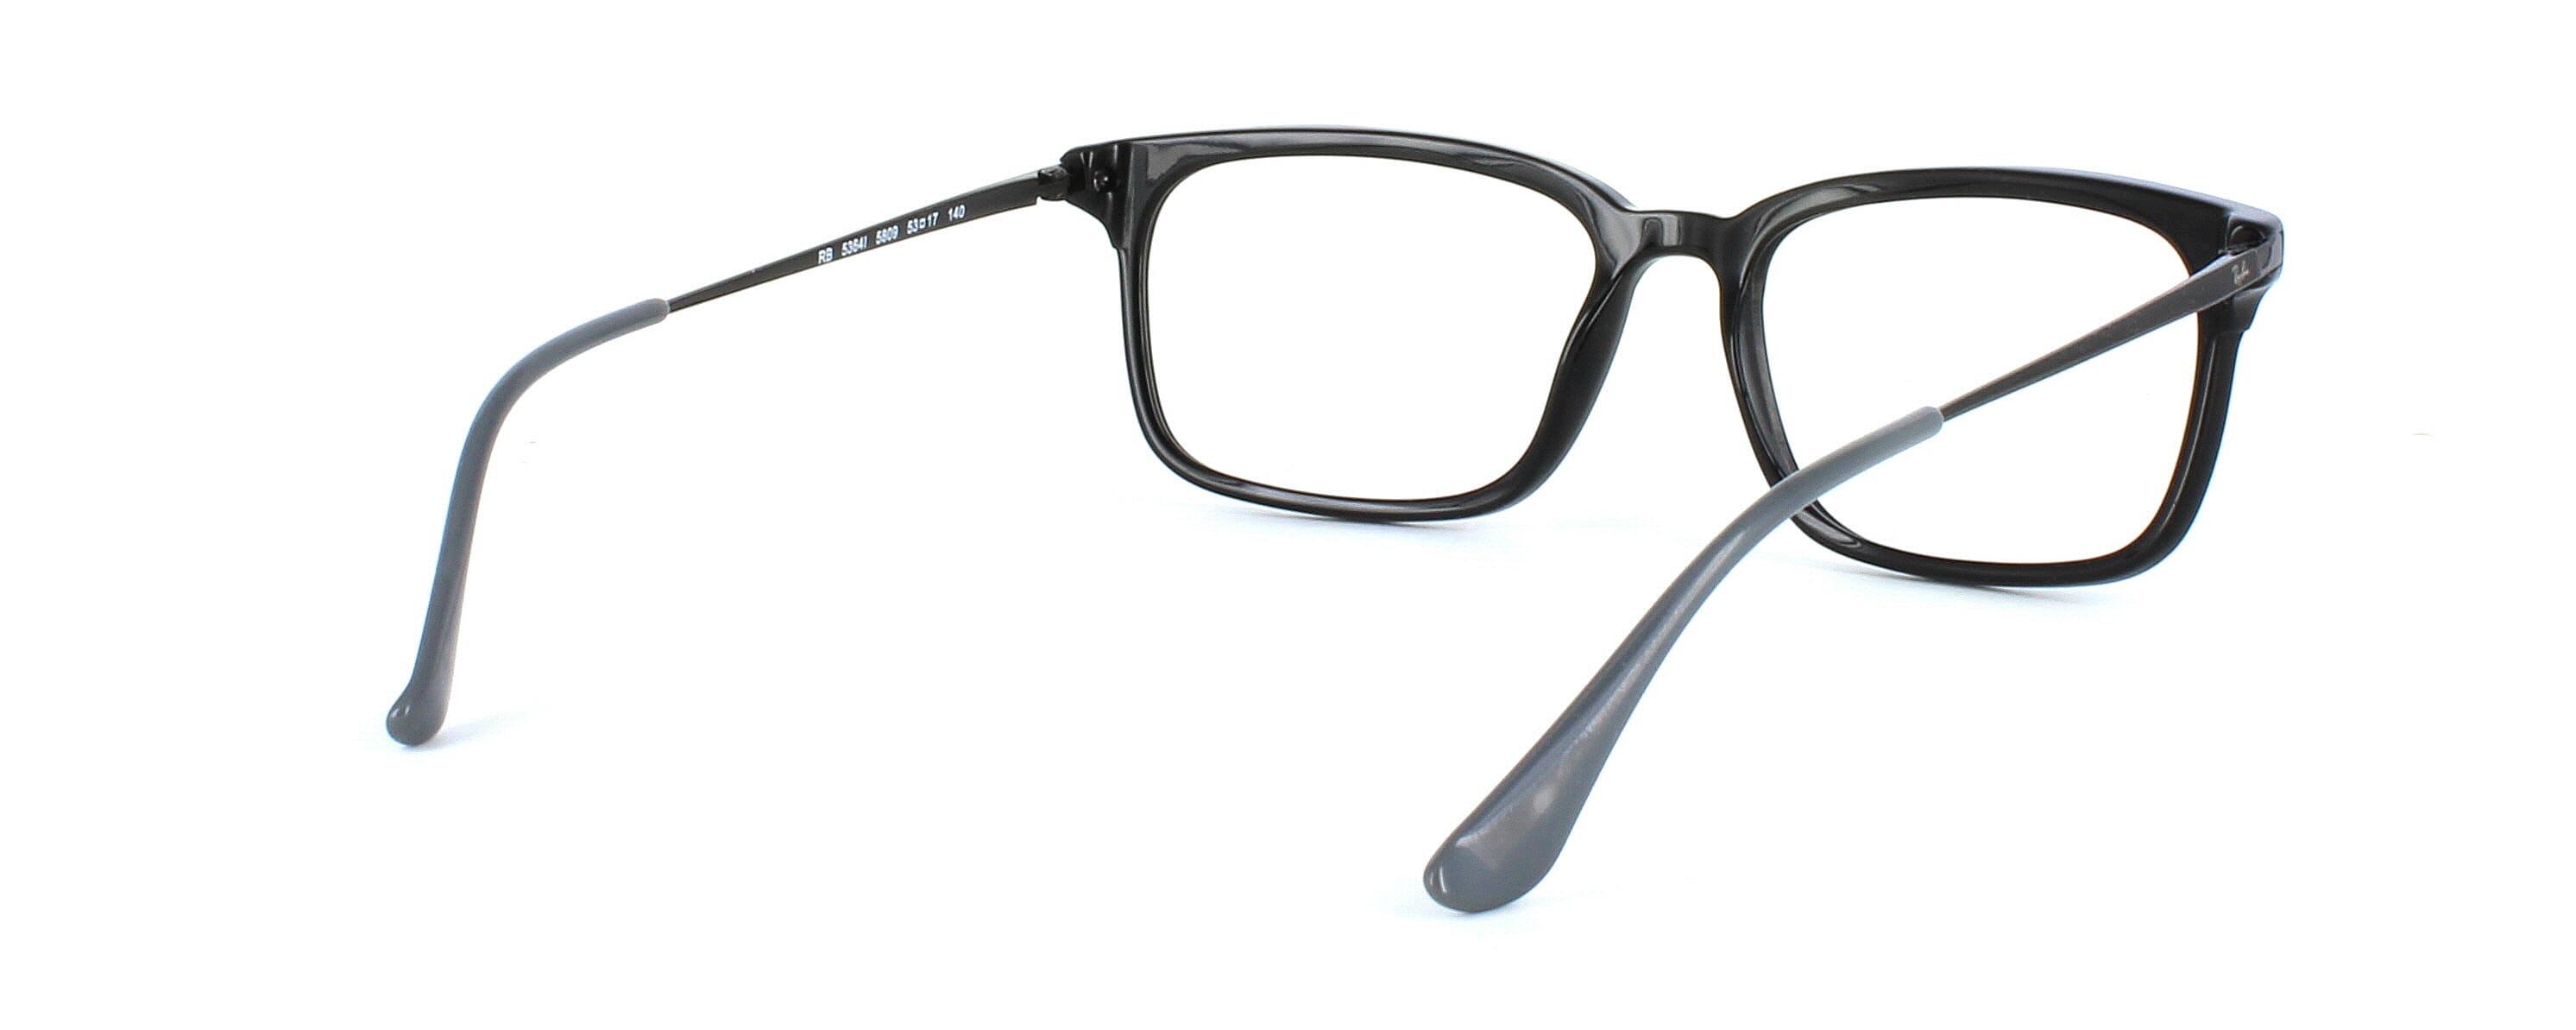 Ray Ban 53641 - Unisex shiny black acetate glasses frame - image view 5